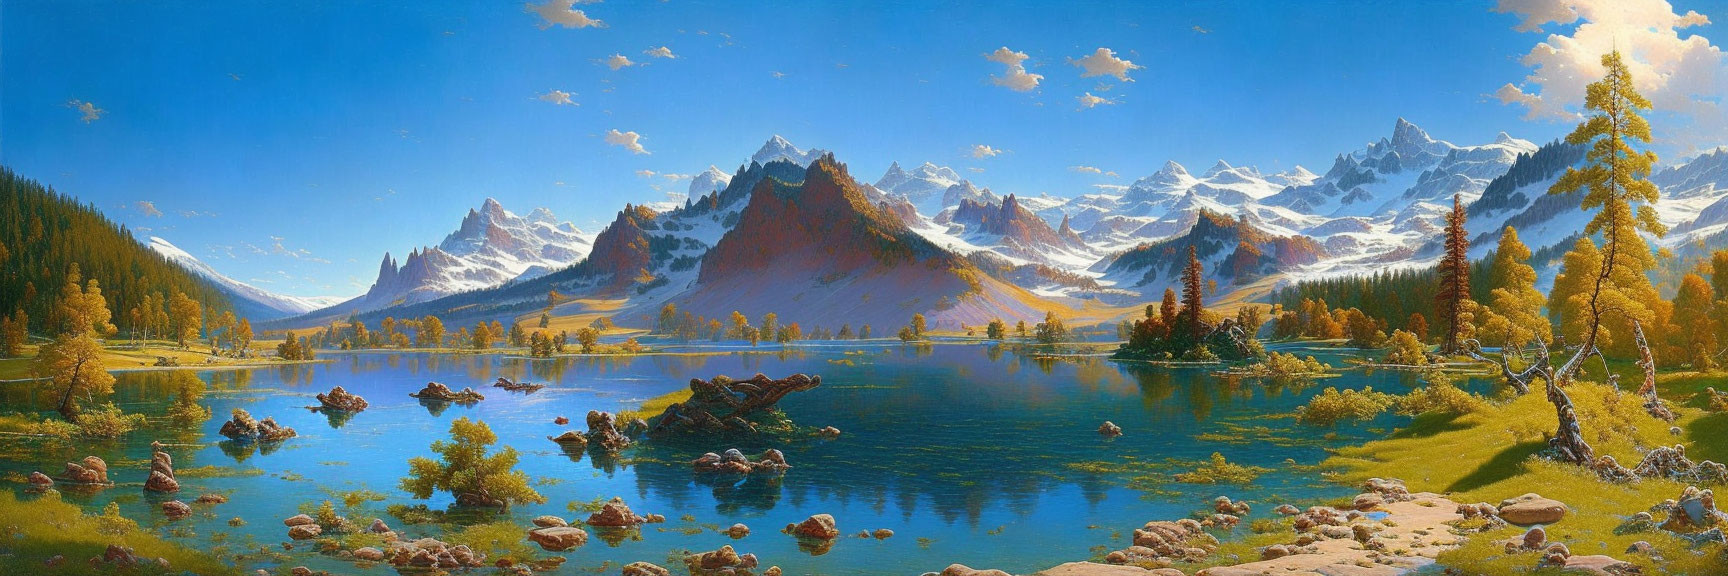 Serene mountain landscape with blue lake, autumn trees, rocky peaks